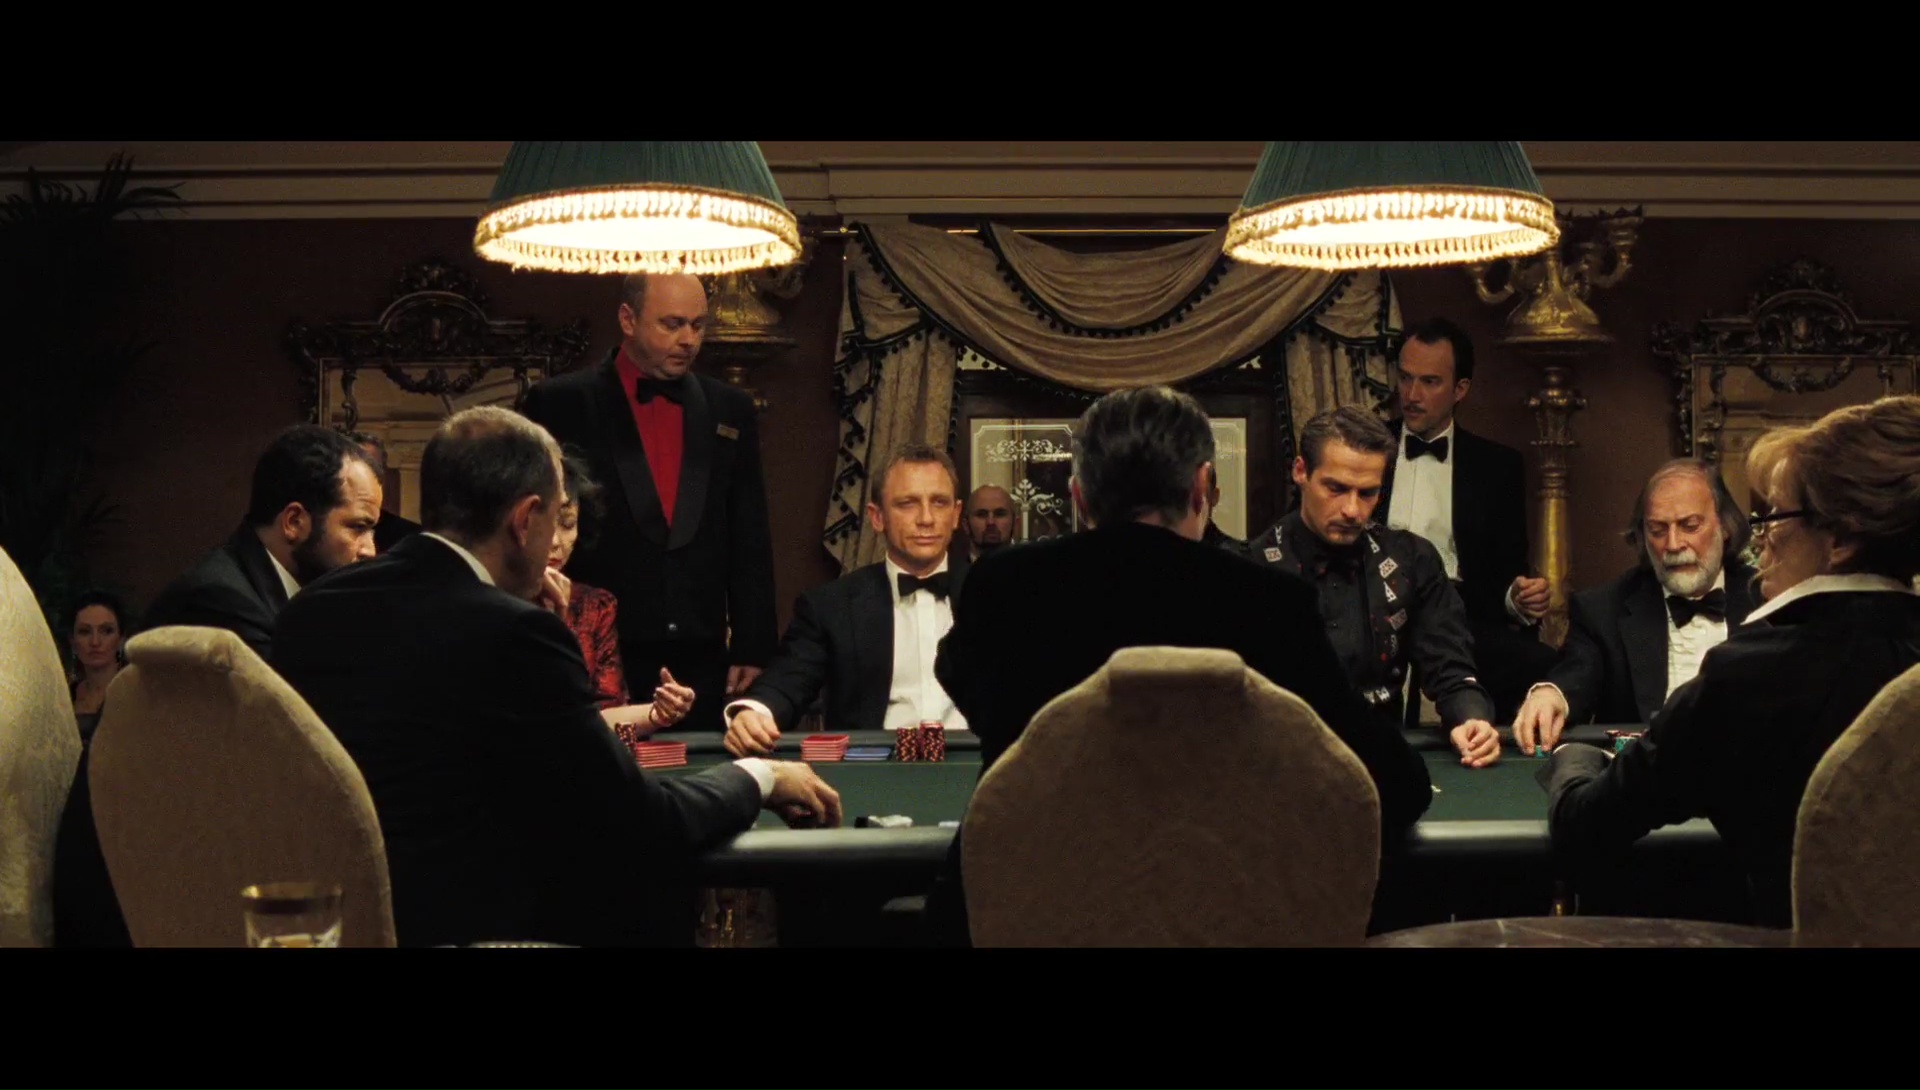 007 Casino Royale 1080p Lat-Cast-Ing 5.1 (2006) JE5FICfU_o